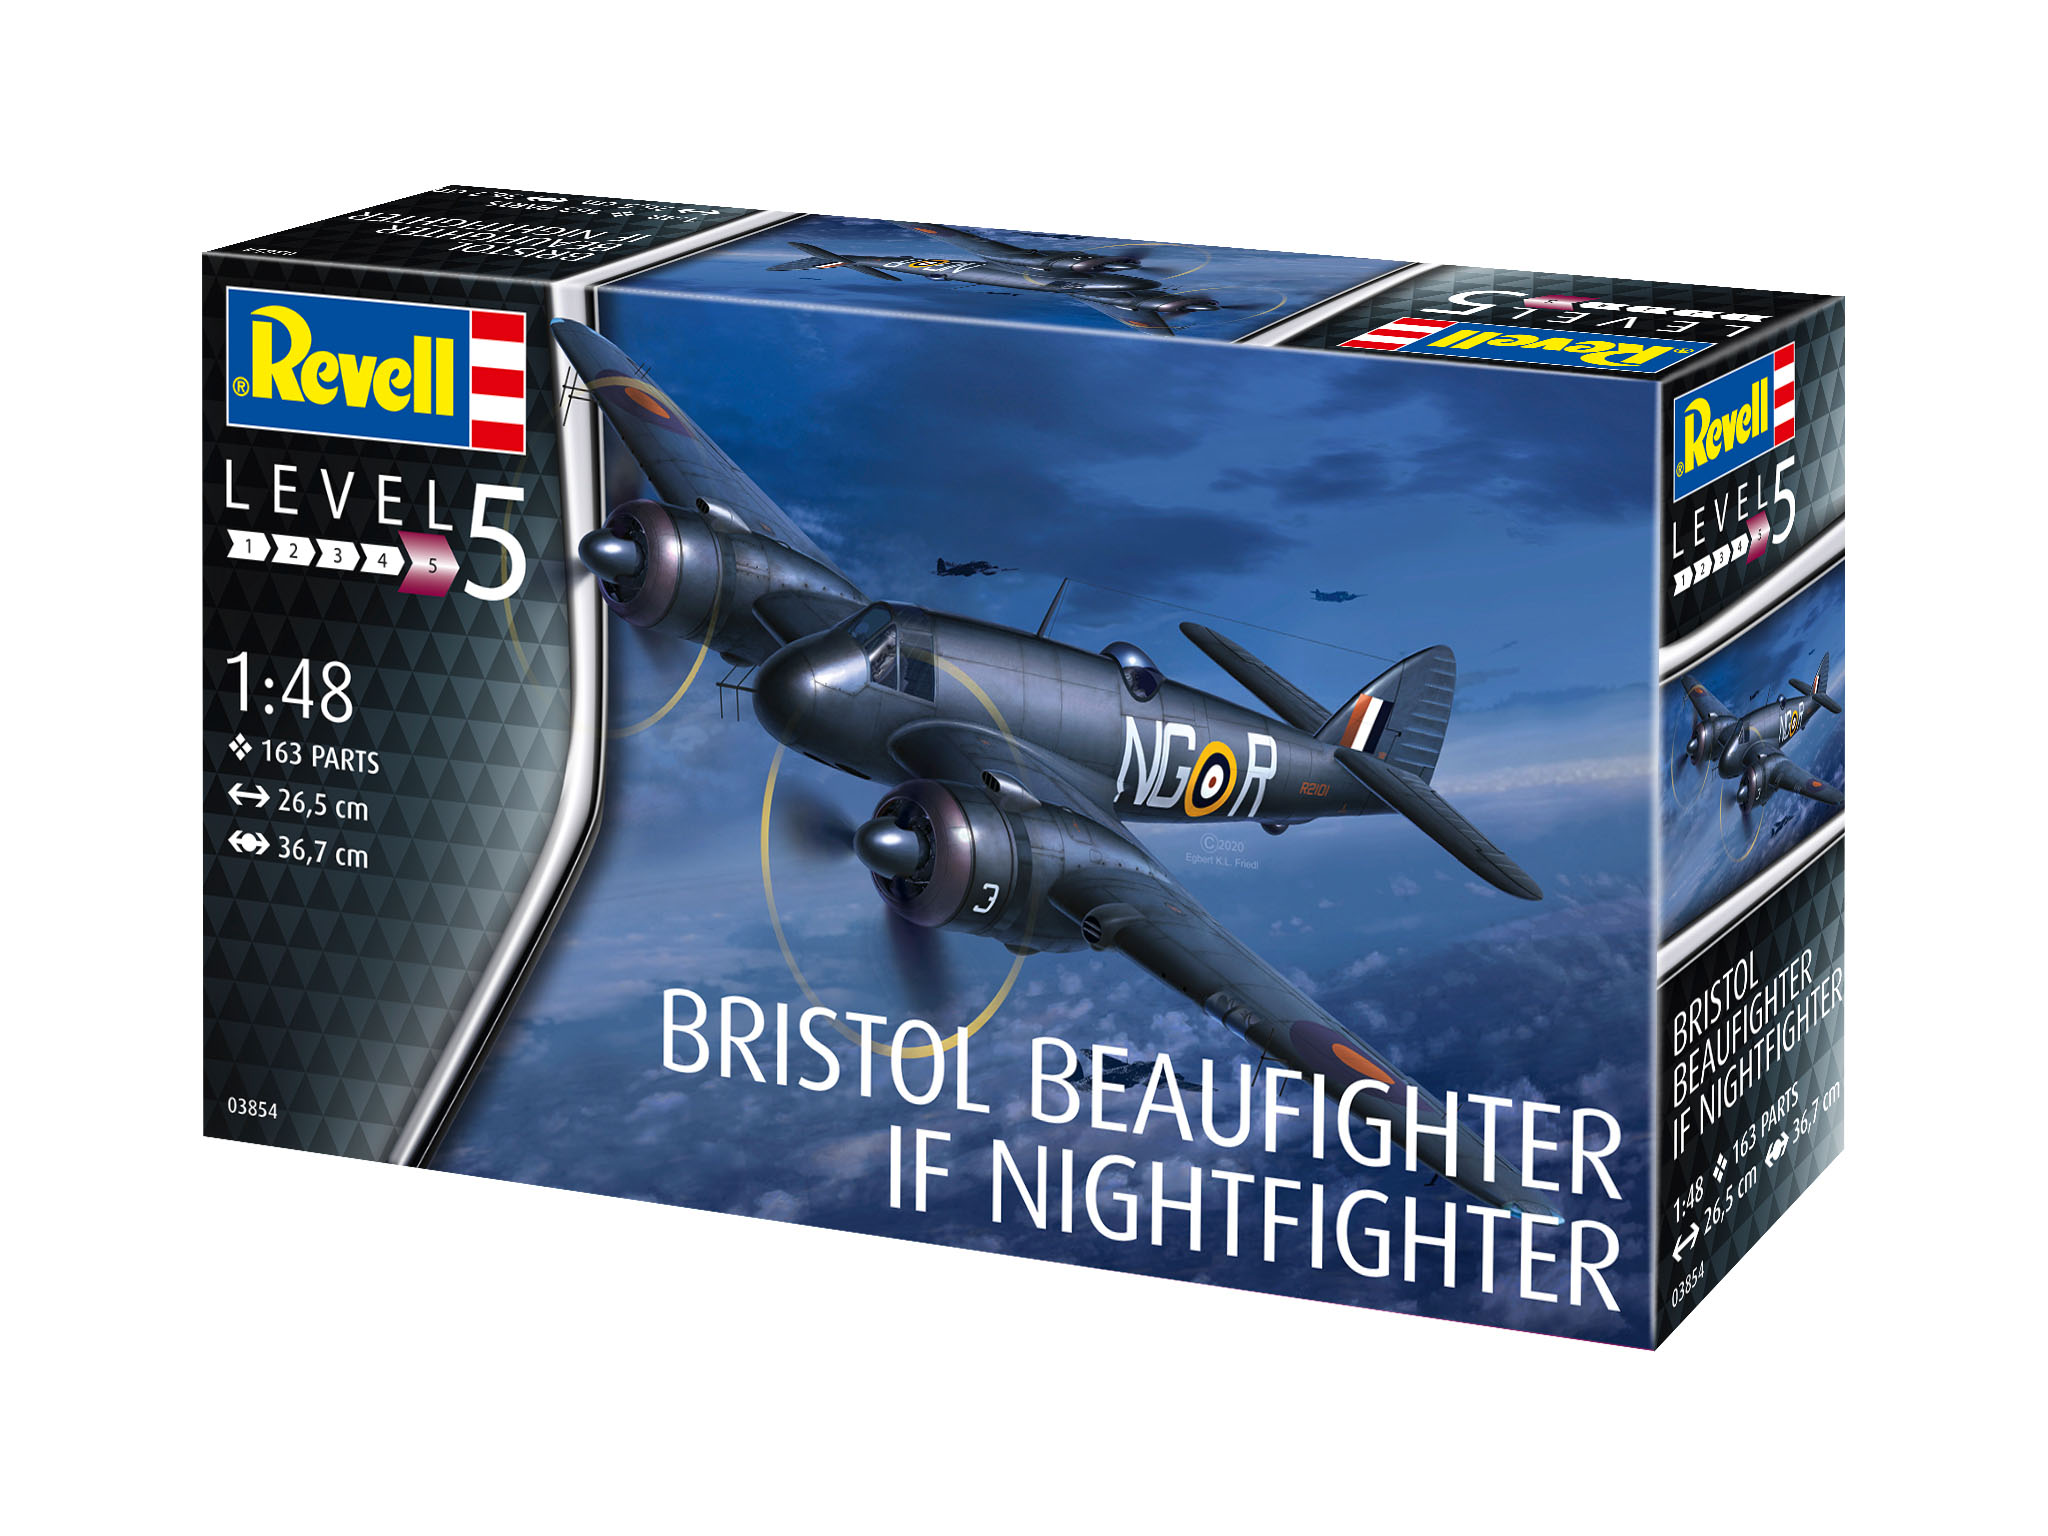 Beaufighter IF Nightfighter - 03854